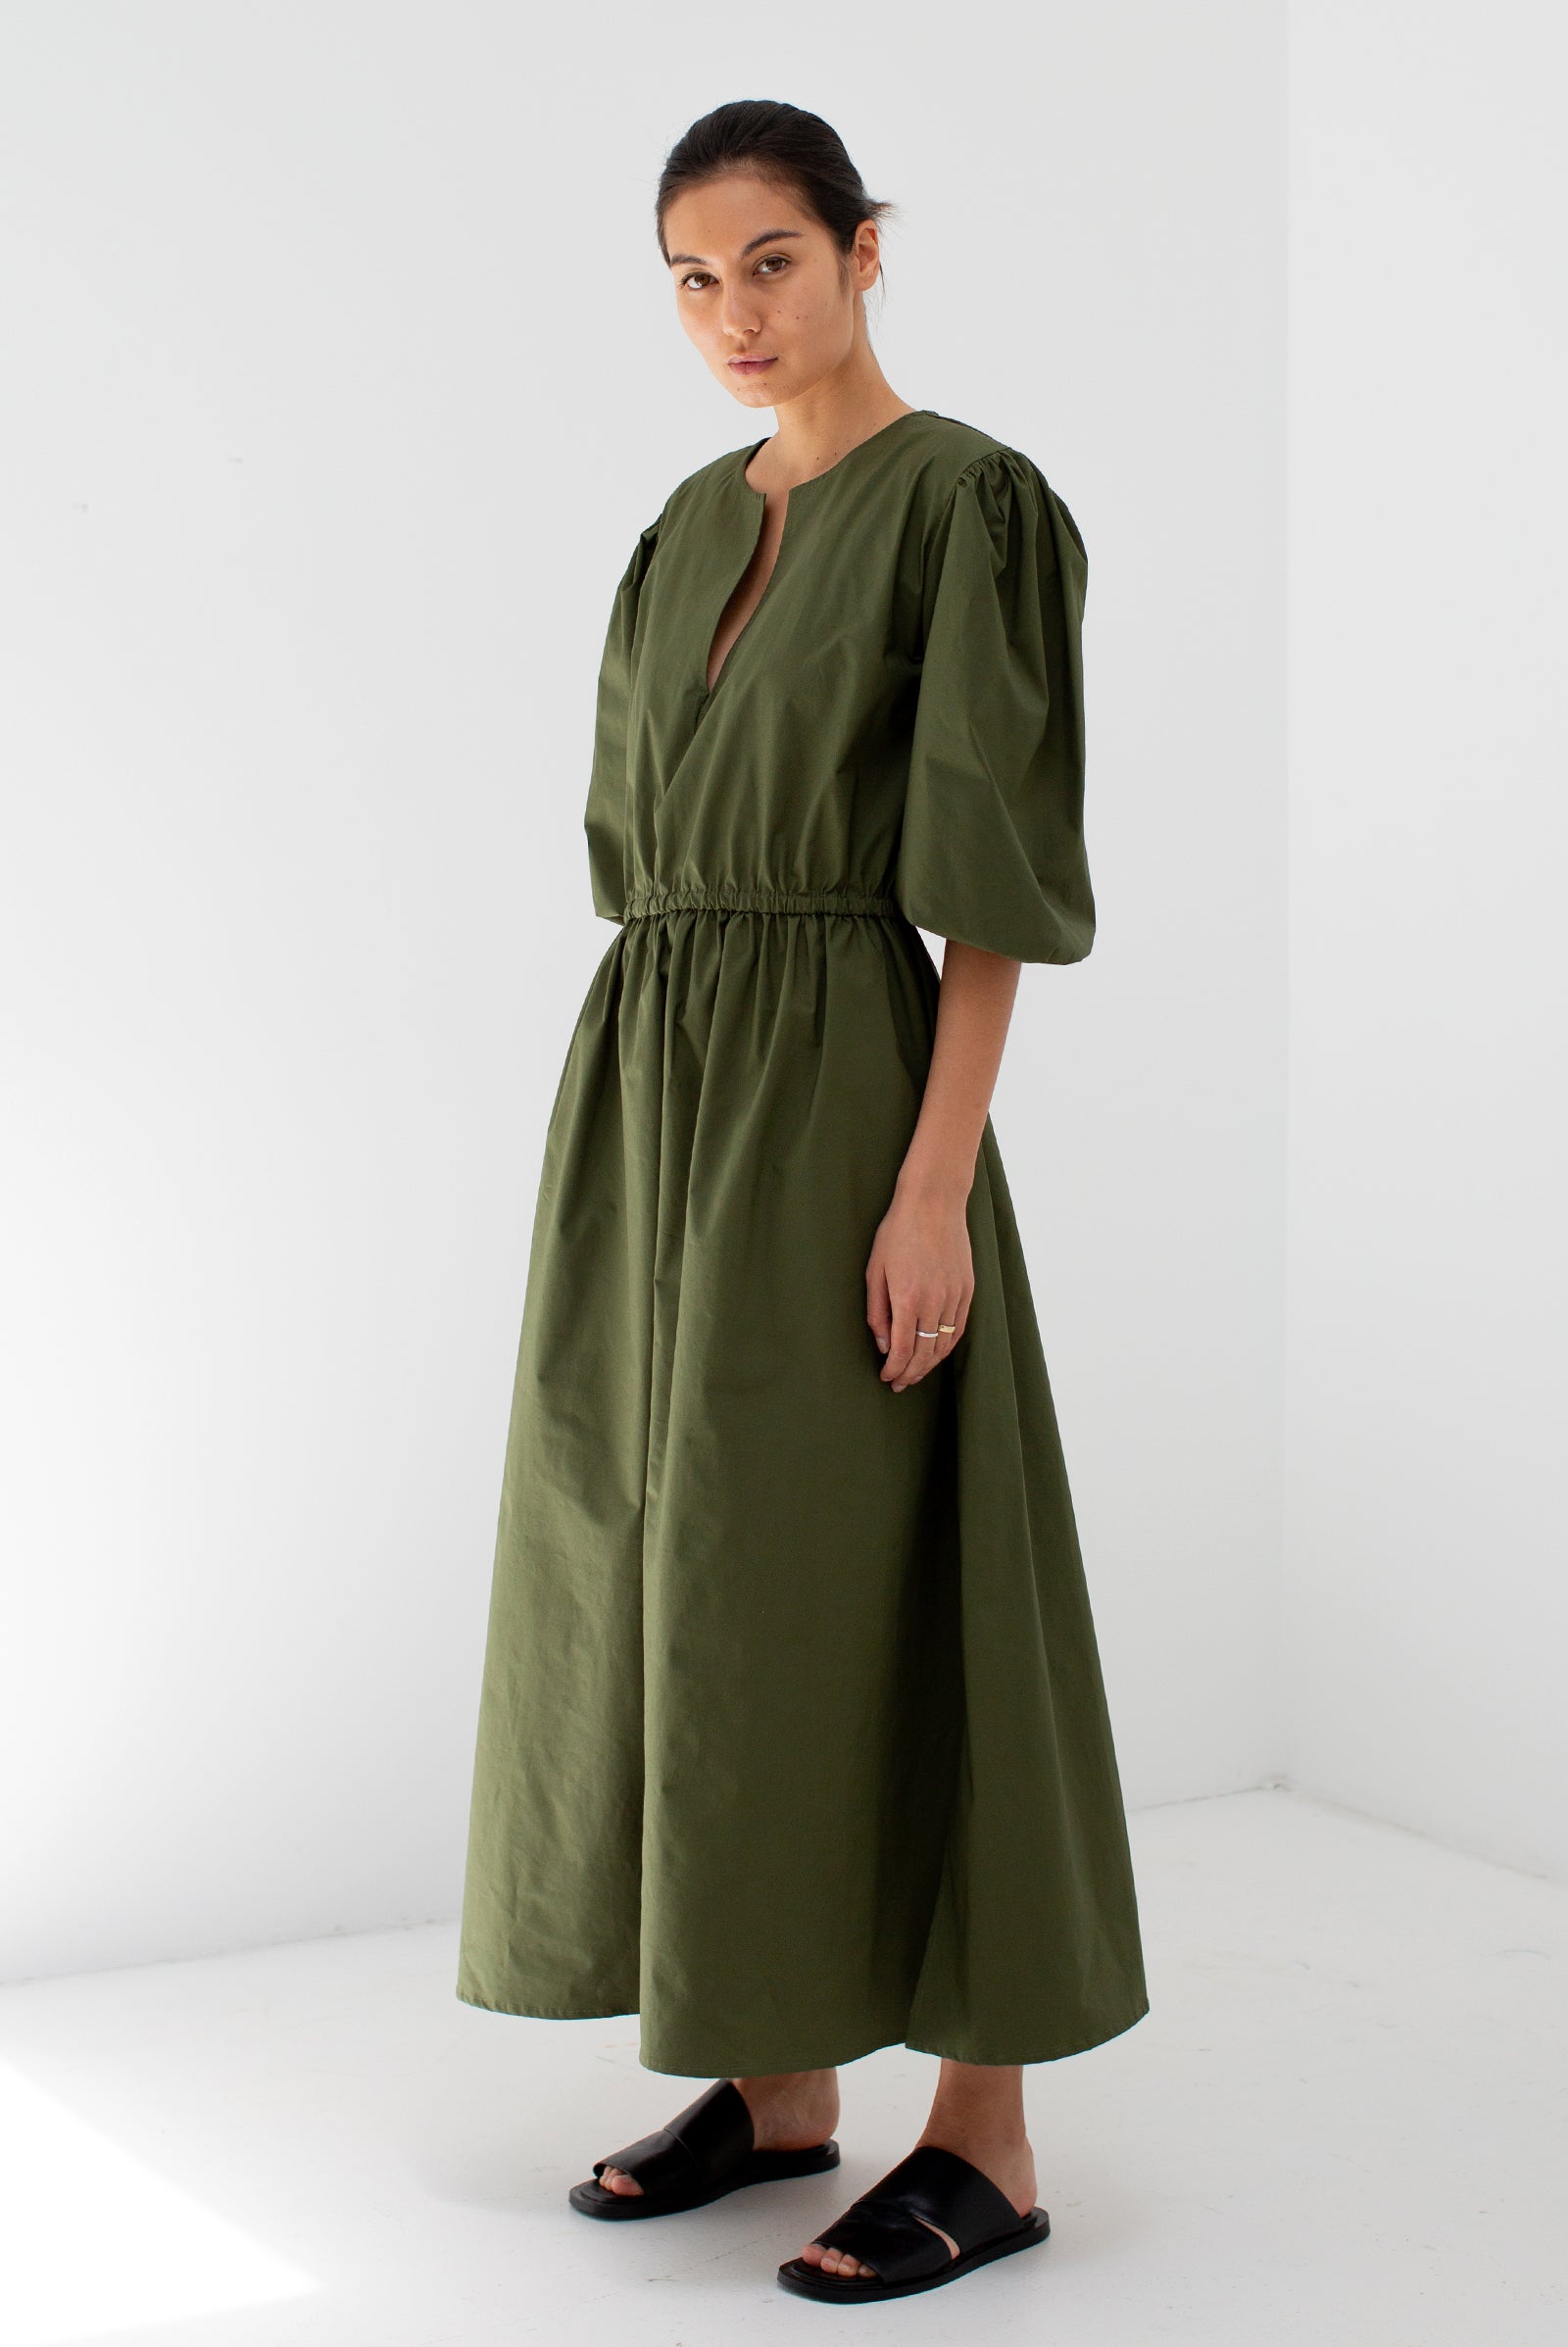 Klein Maxi Dress in Olive